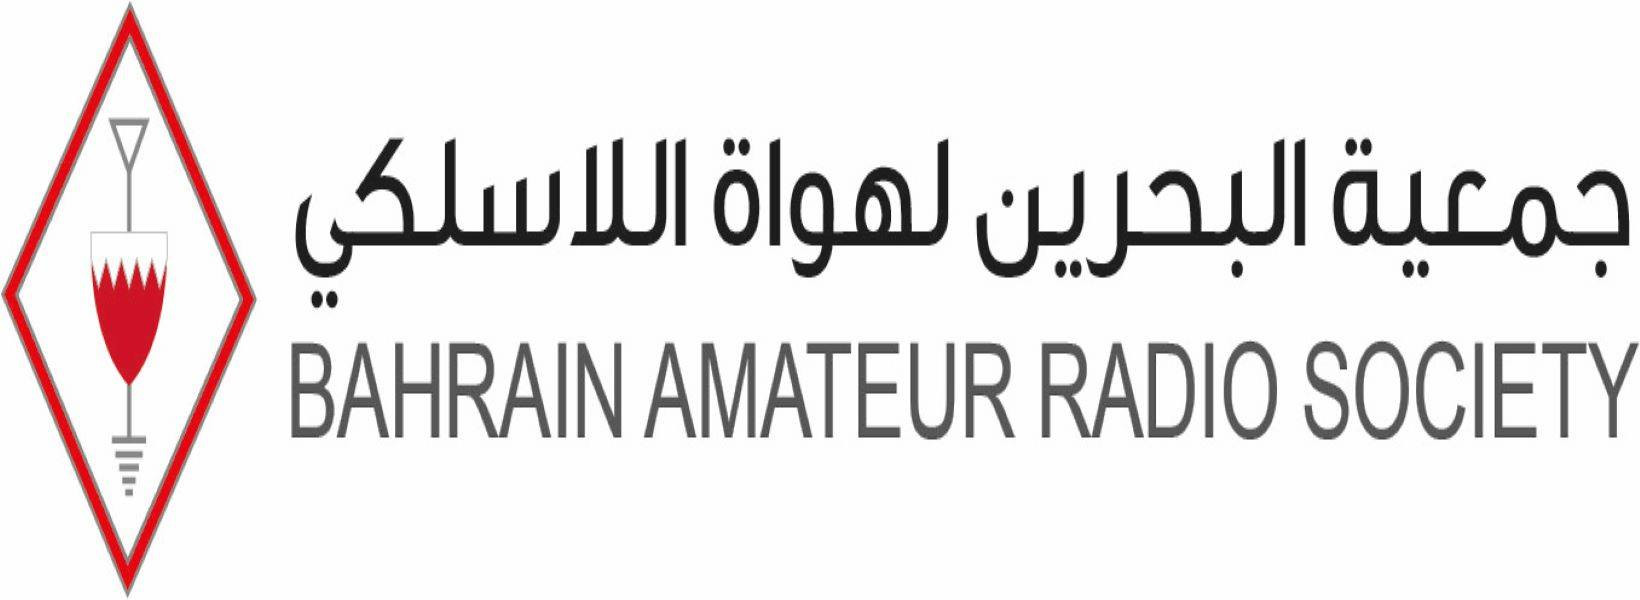 Bahrain Amateur Radio Society Logo